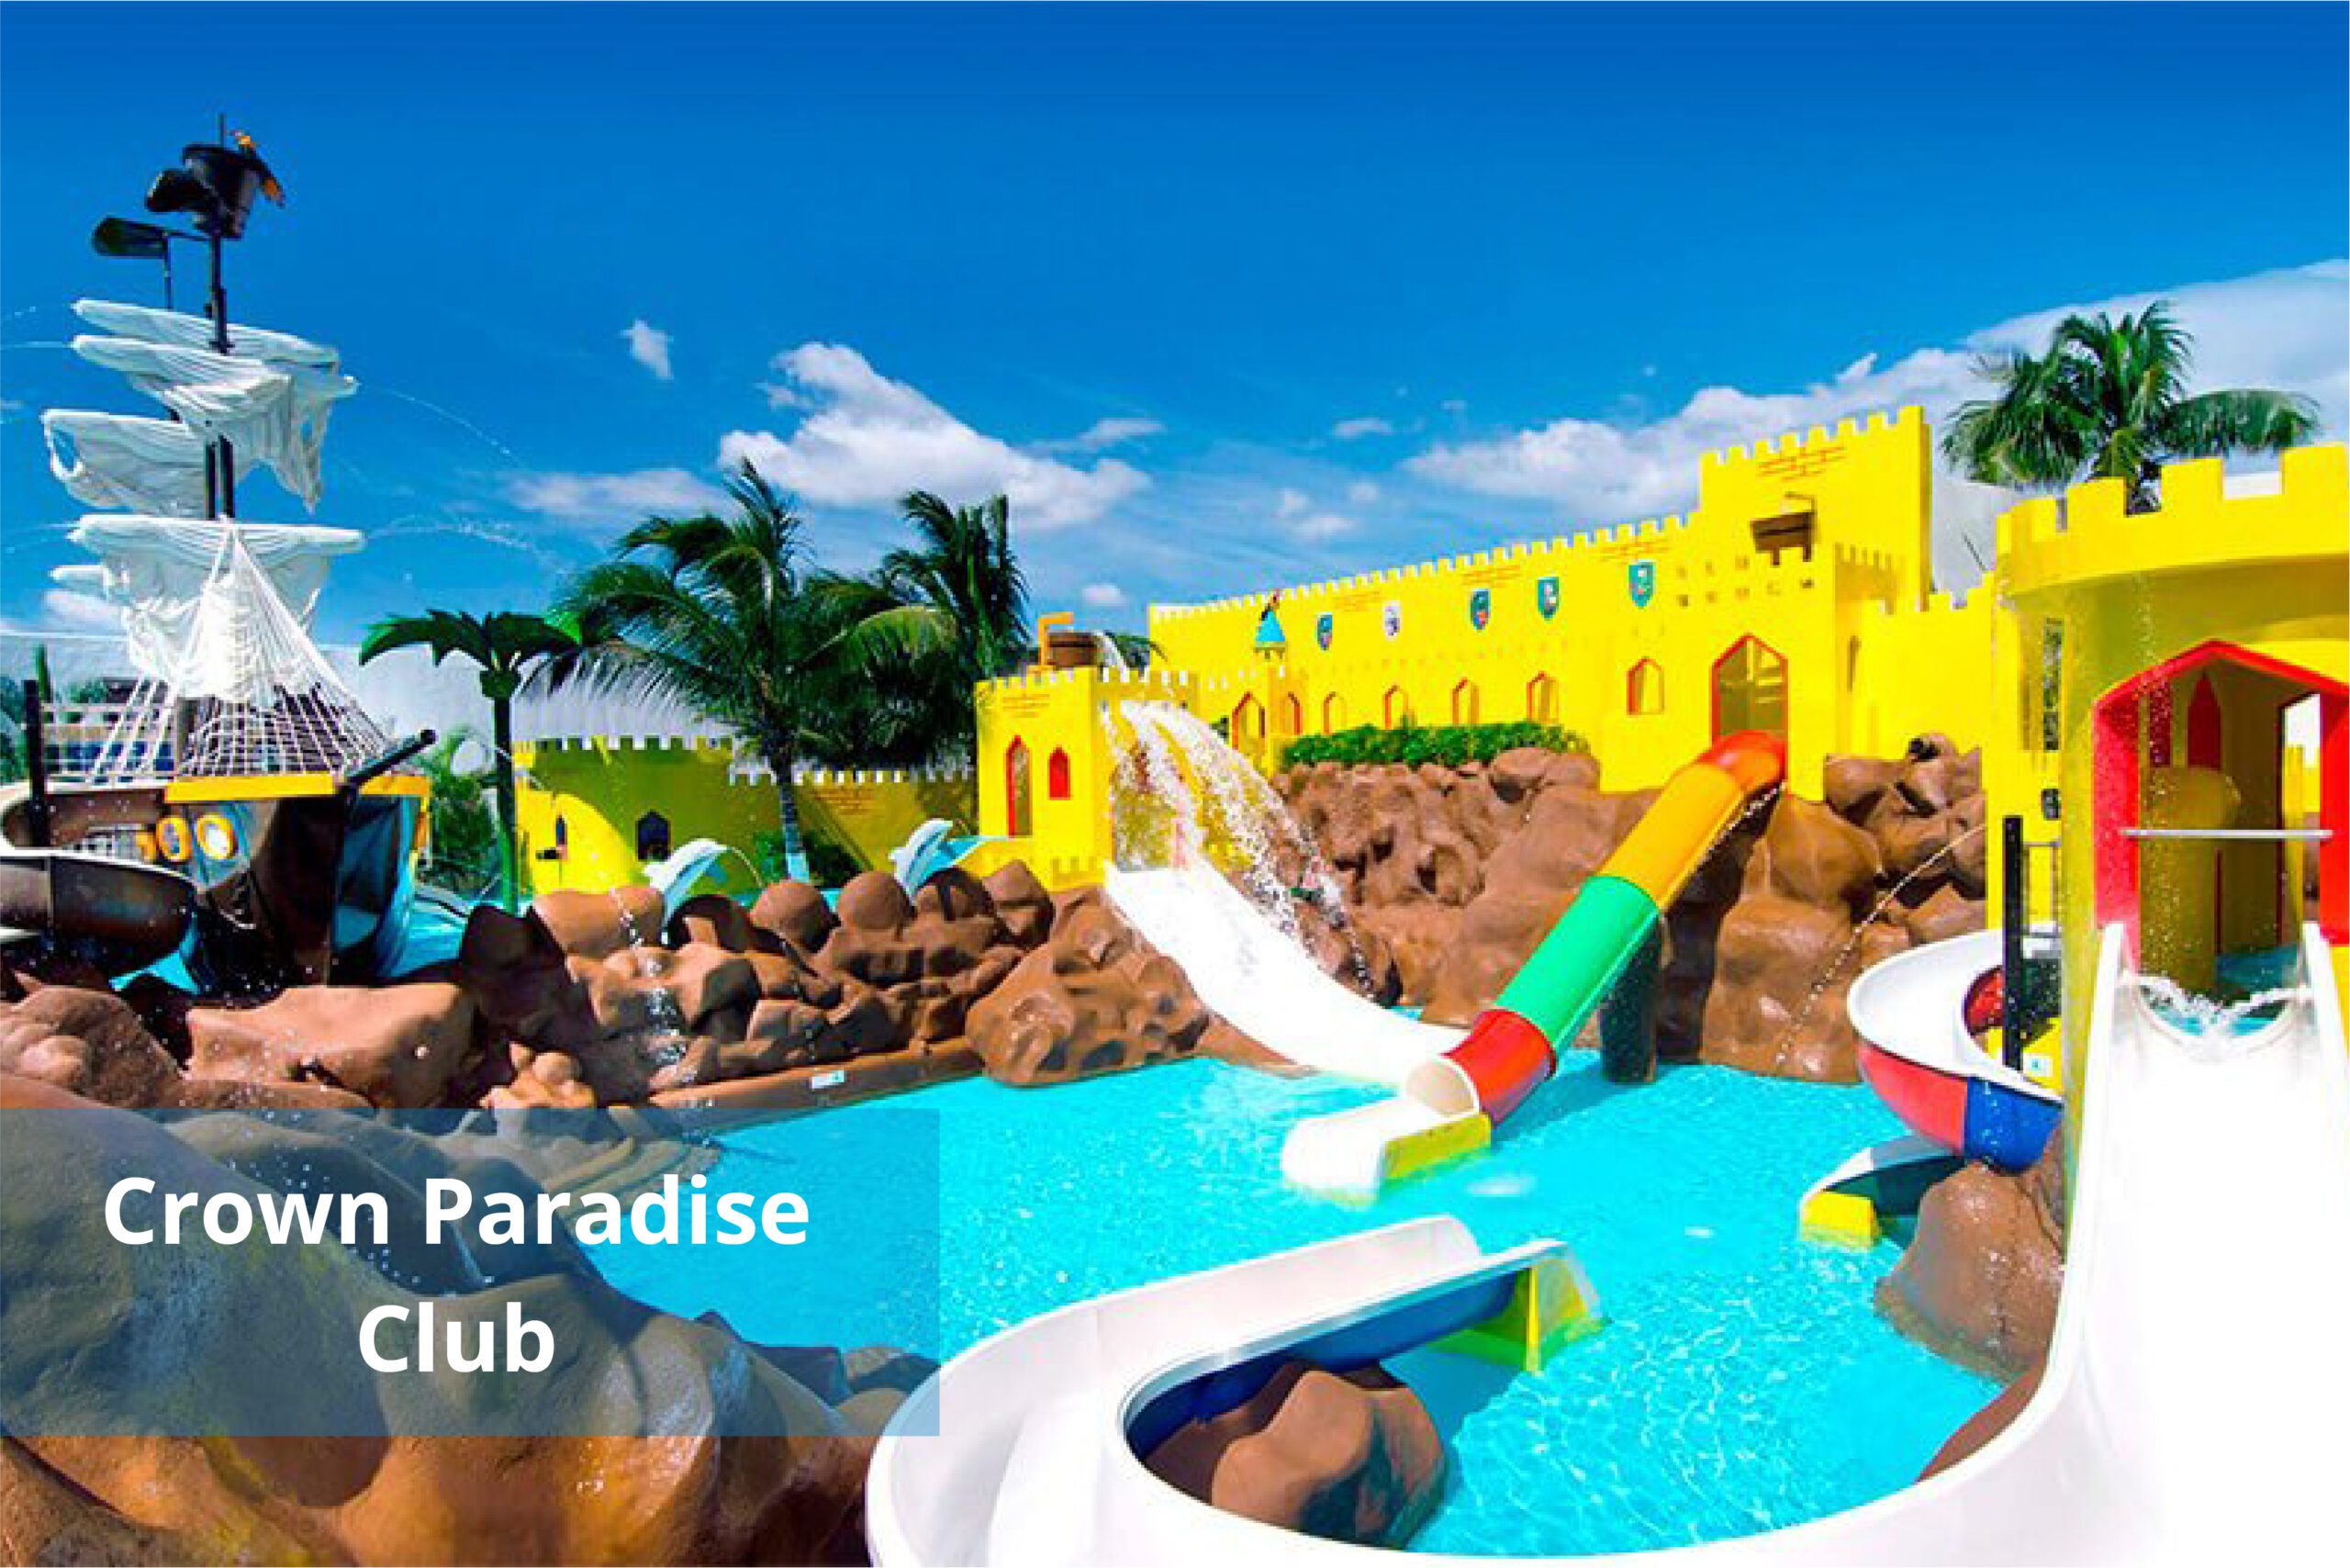 Crown Paradise Club